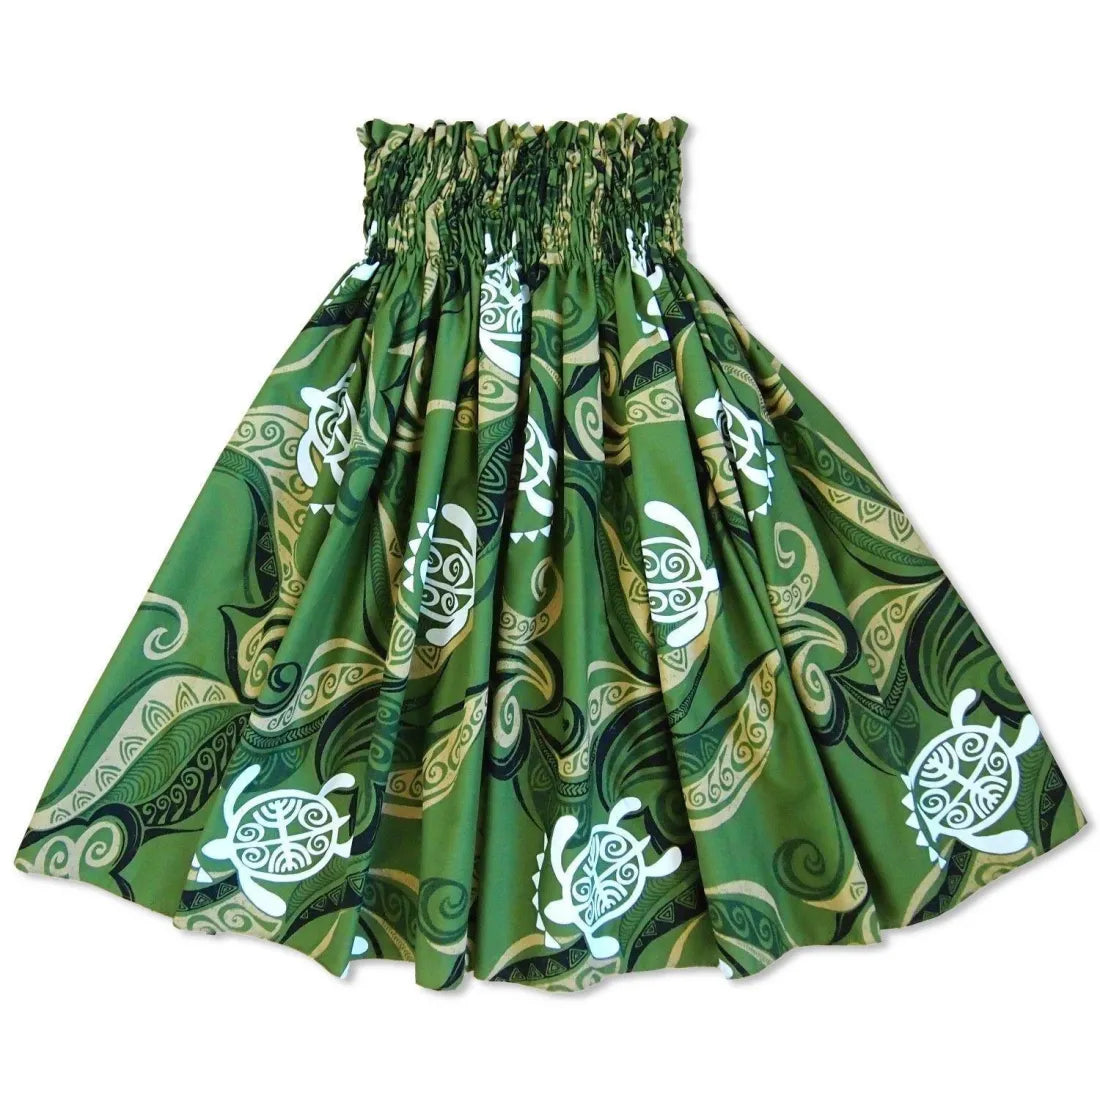 Honu Swim Green Single Pa’u Hawaiian Hula Skirt - Made In Hawaii